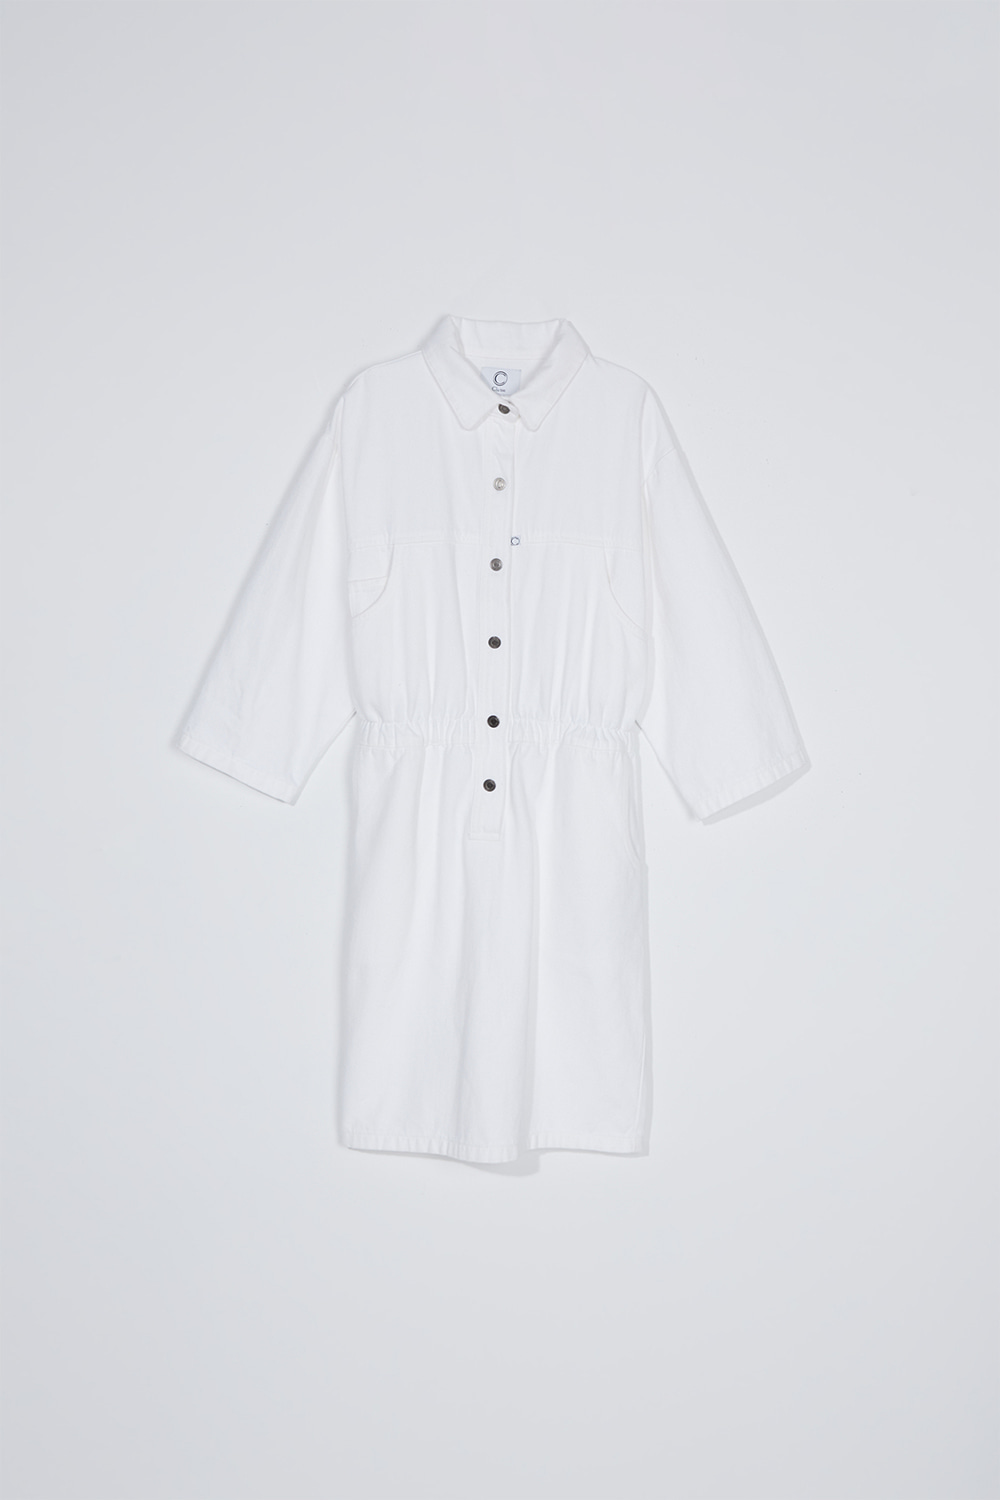 Pocket detail dress_denim white